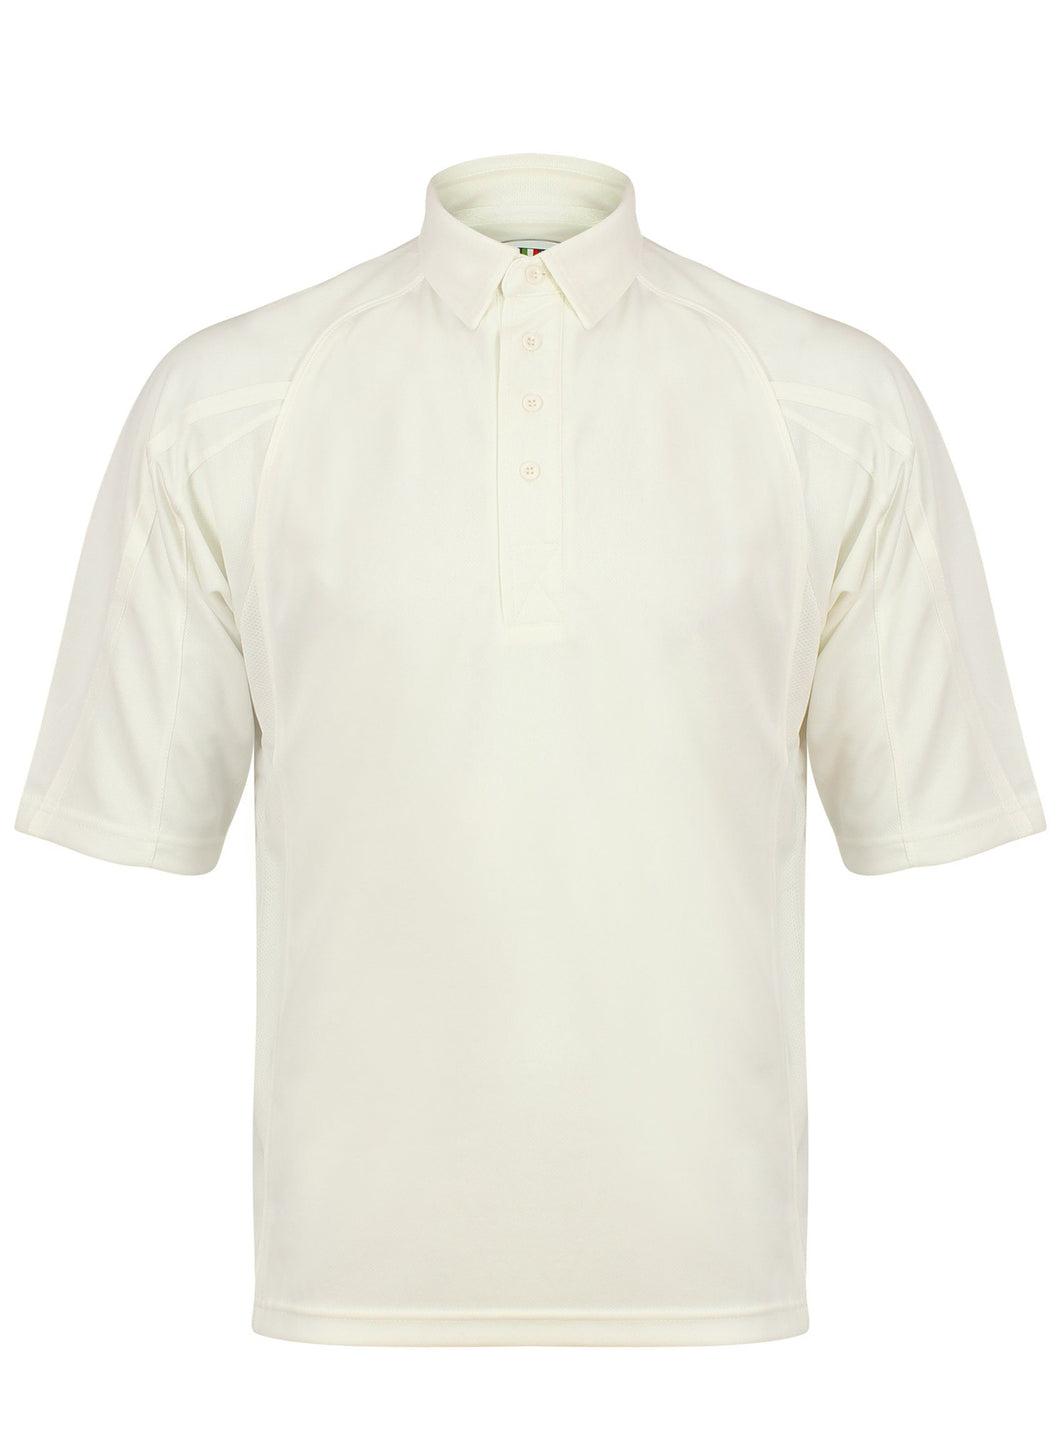 Cricket Short Sleeve shirt Gazelle Sports UK 